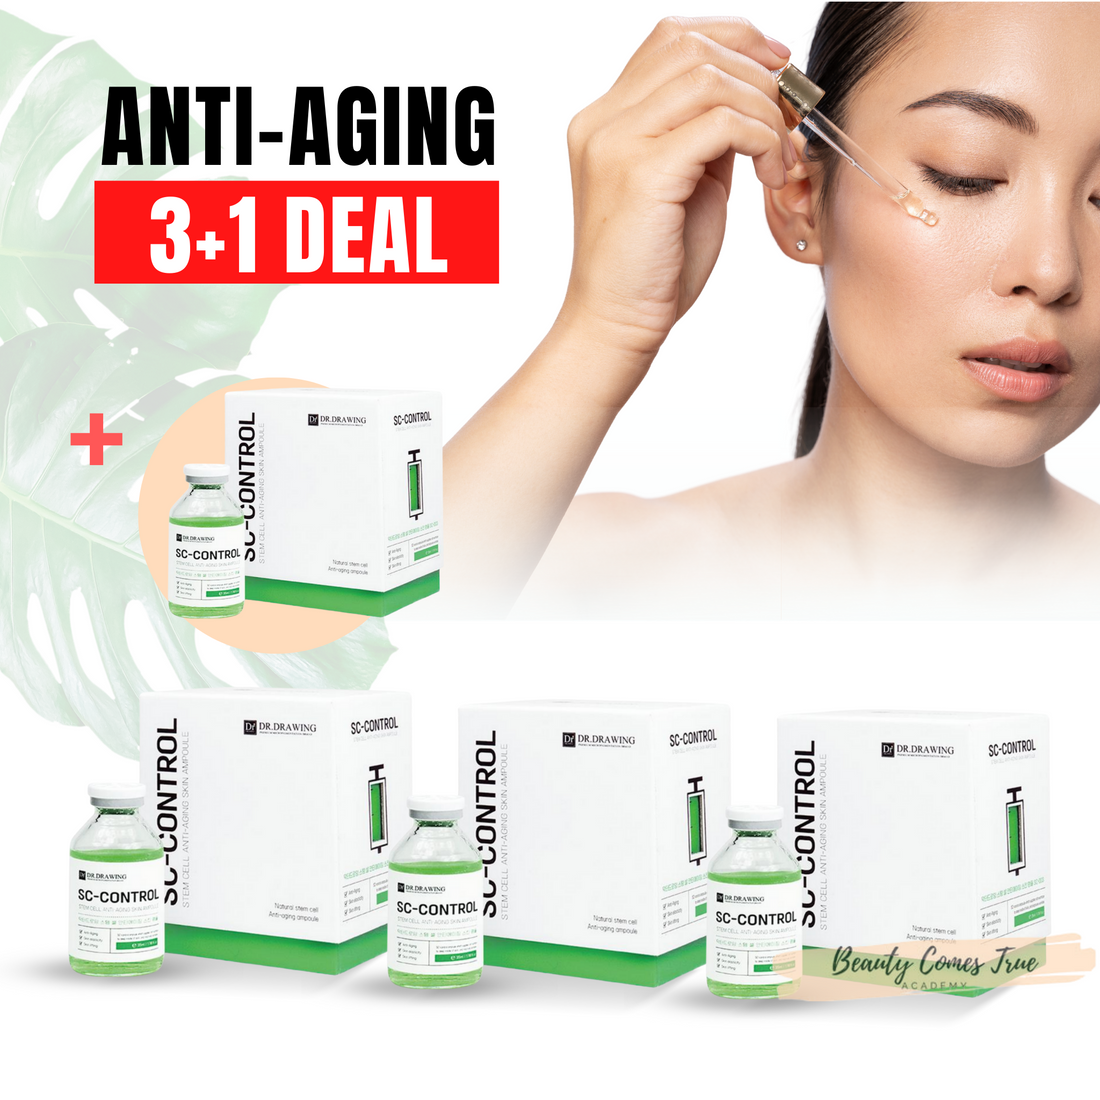 3 + 1 Deal Anti Aging Serum